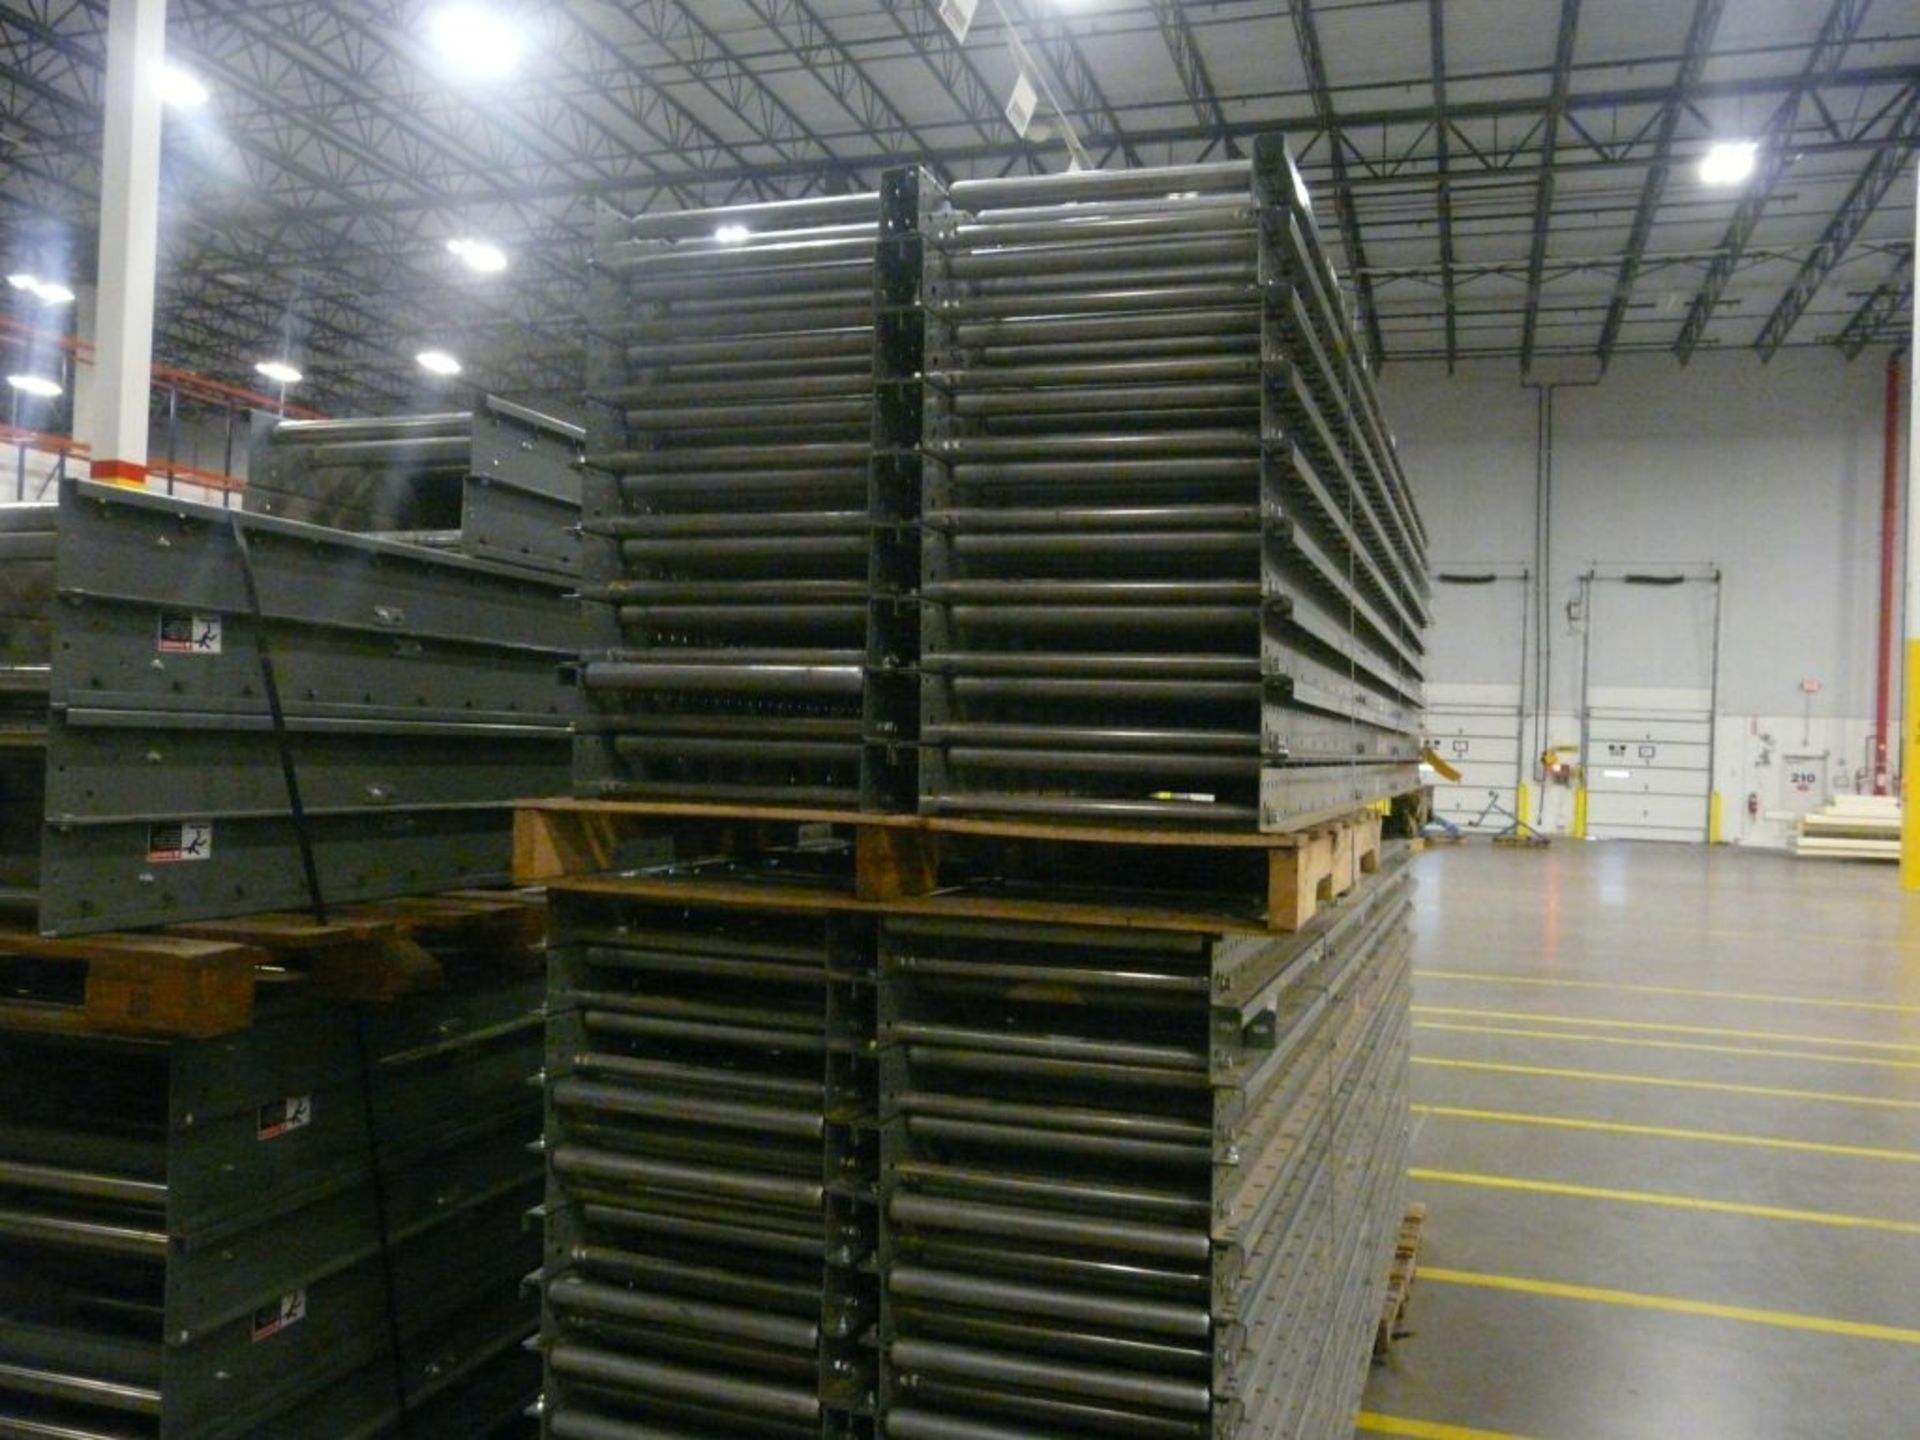 Lot of (12) 140 Belt Intermediate Conveyors - 12'L x 16"W; Tag: 223658 - $30 Lot Loading Fee - Image 2 of 3